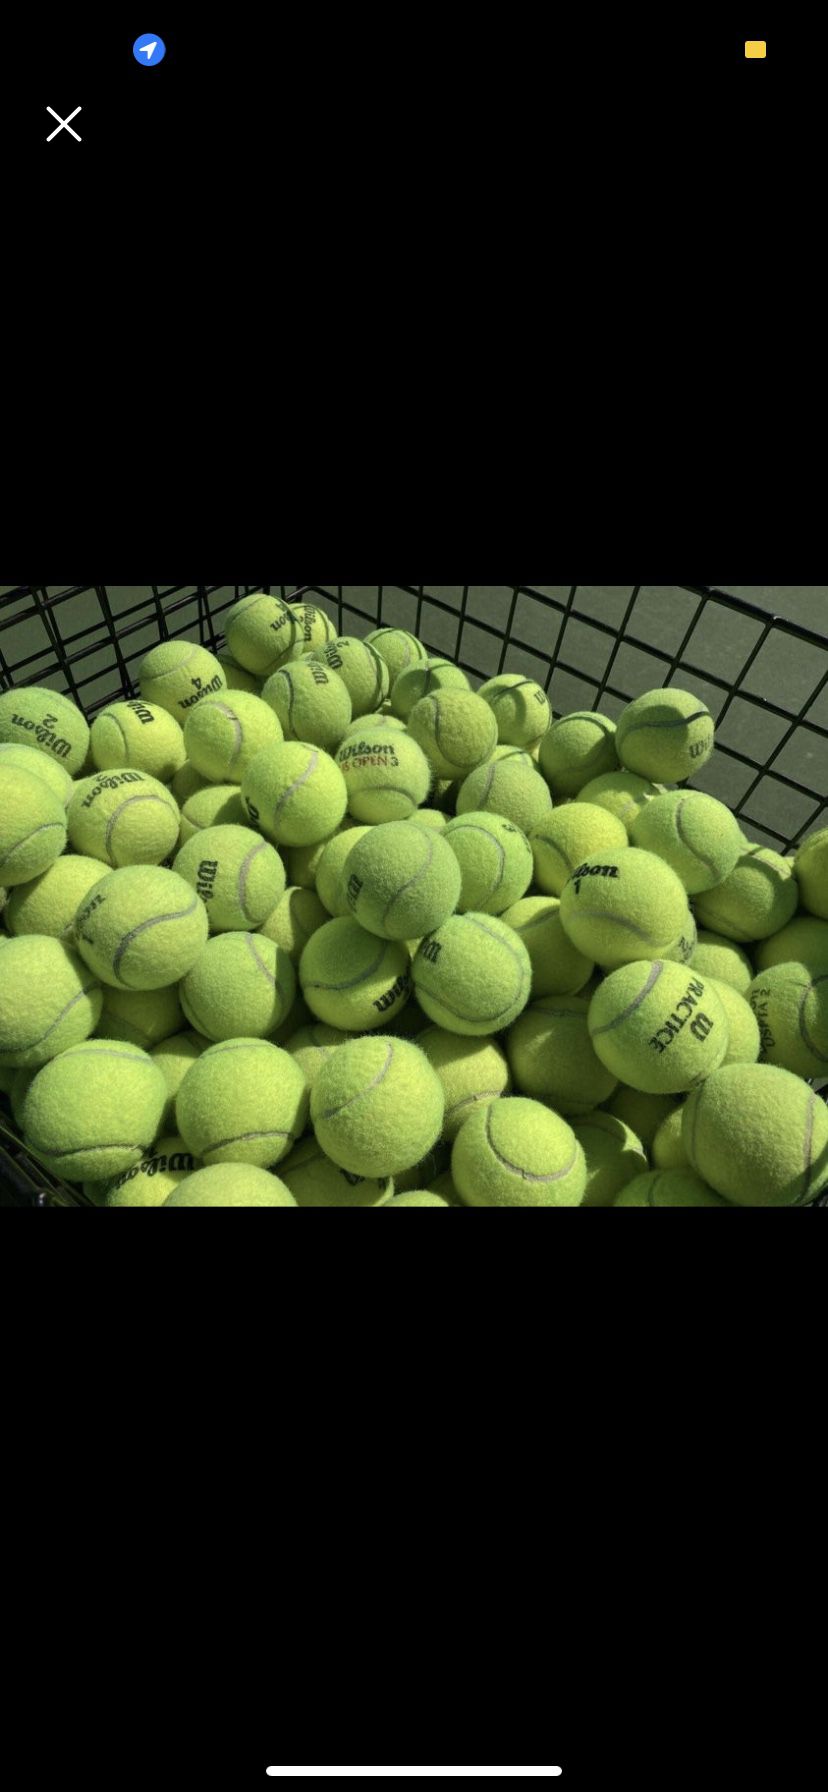 Tennis Balls Used